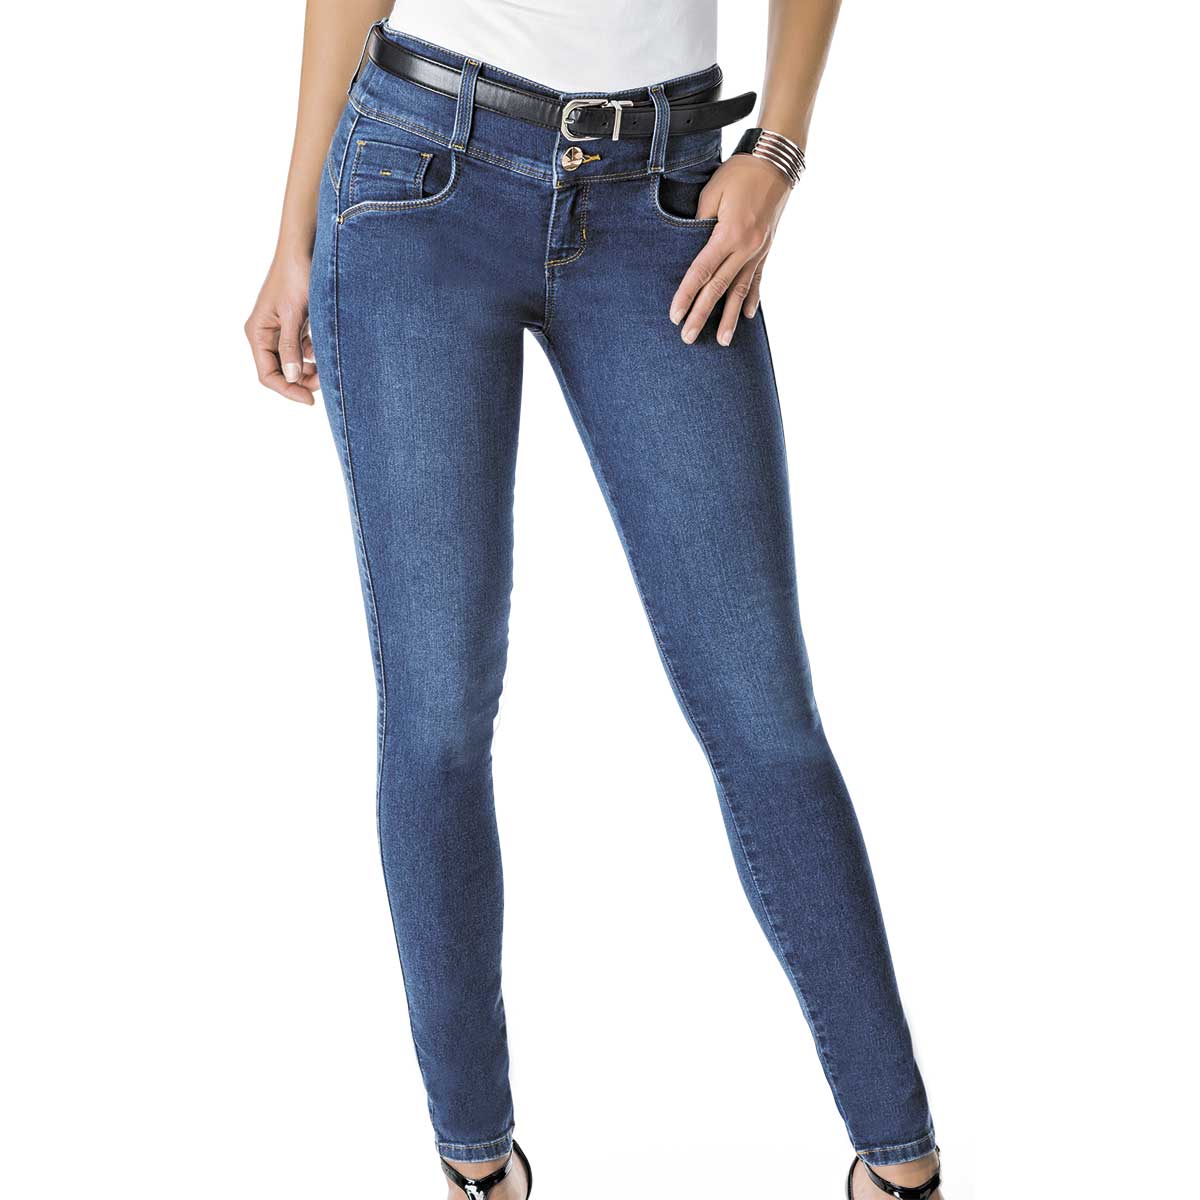 Pakar.com - Mayo: Regalos para mamá | Jeans para mujer cod-72787